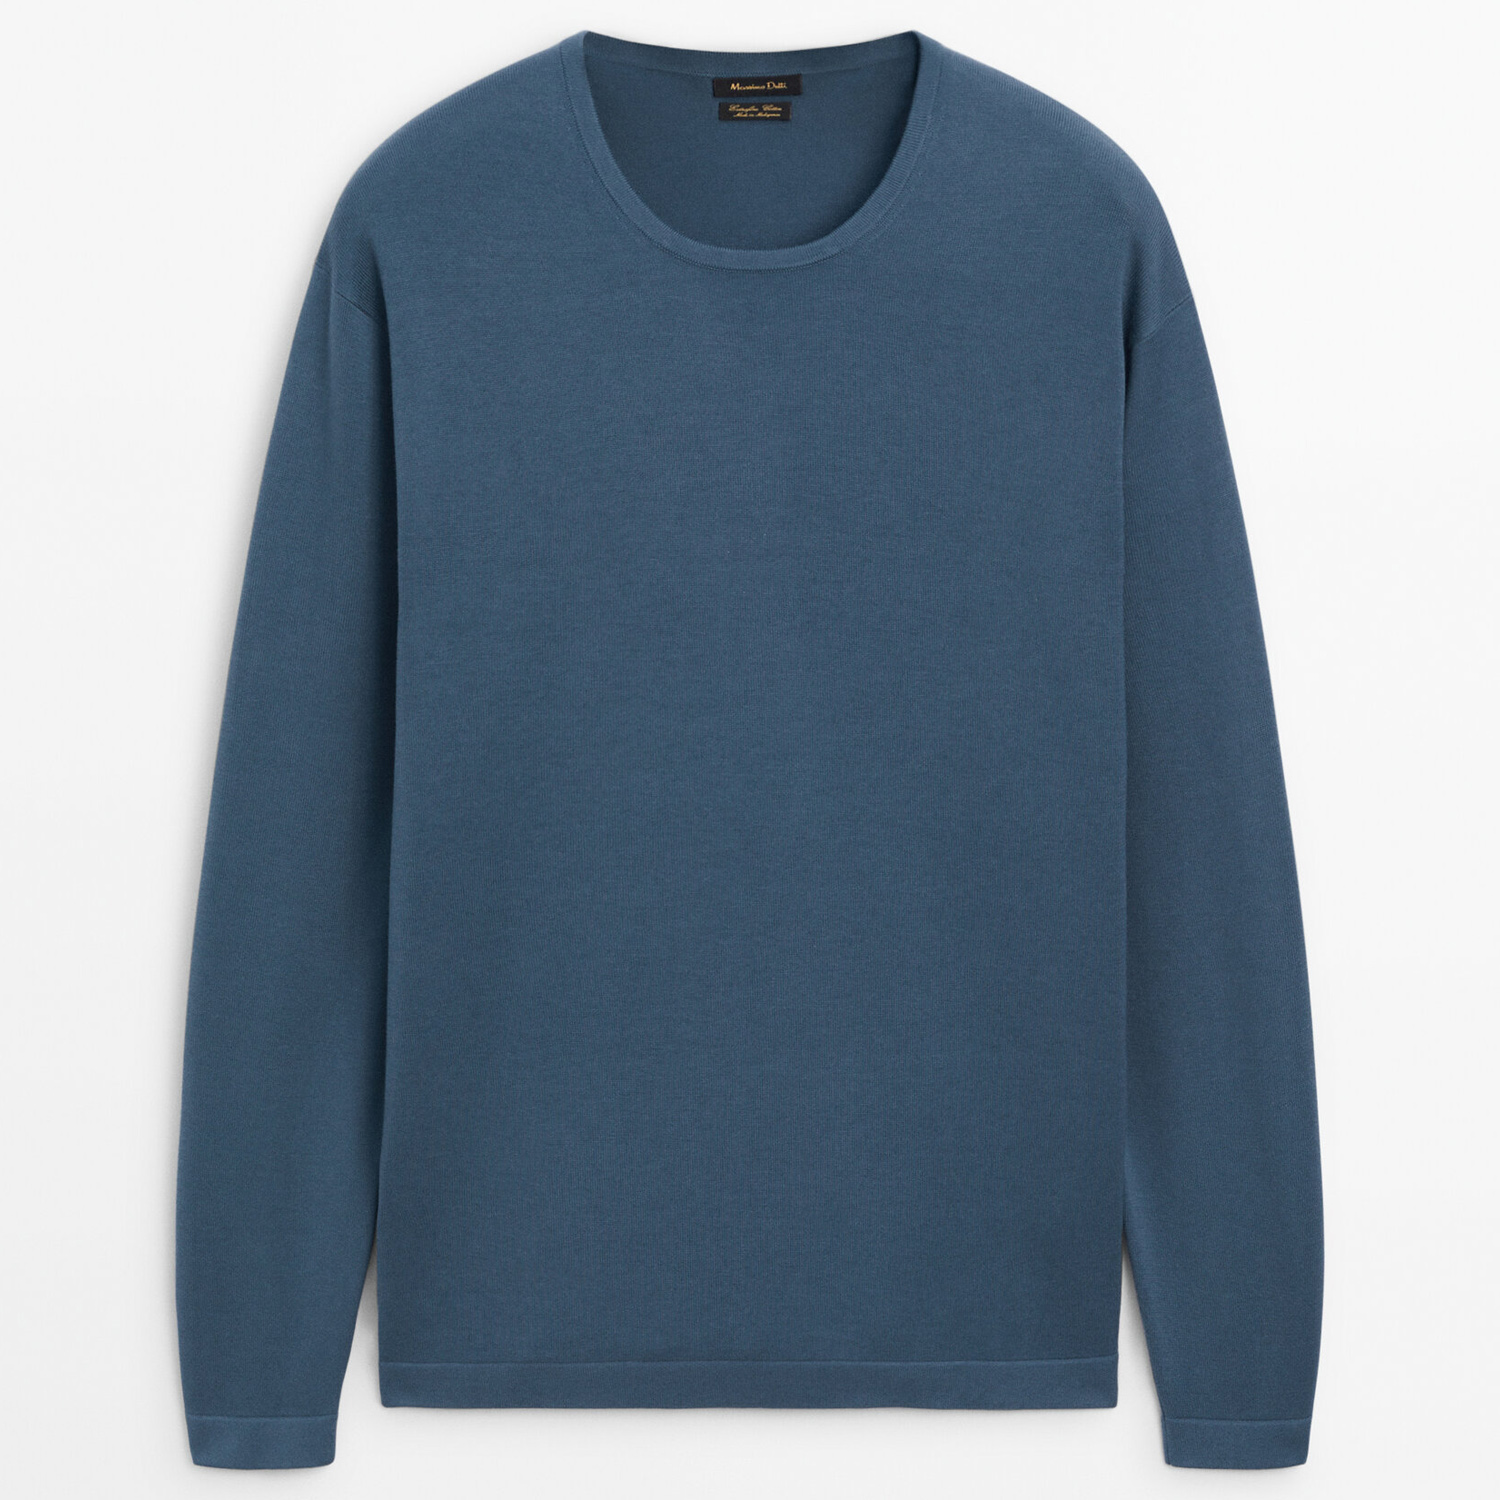 Свитер Massimo Dutti Crew Neck Knit, синий свитер massimo dutti lightweight crew neck чернильно синий